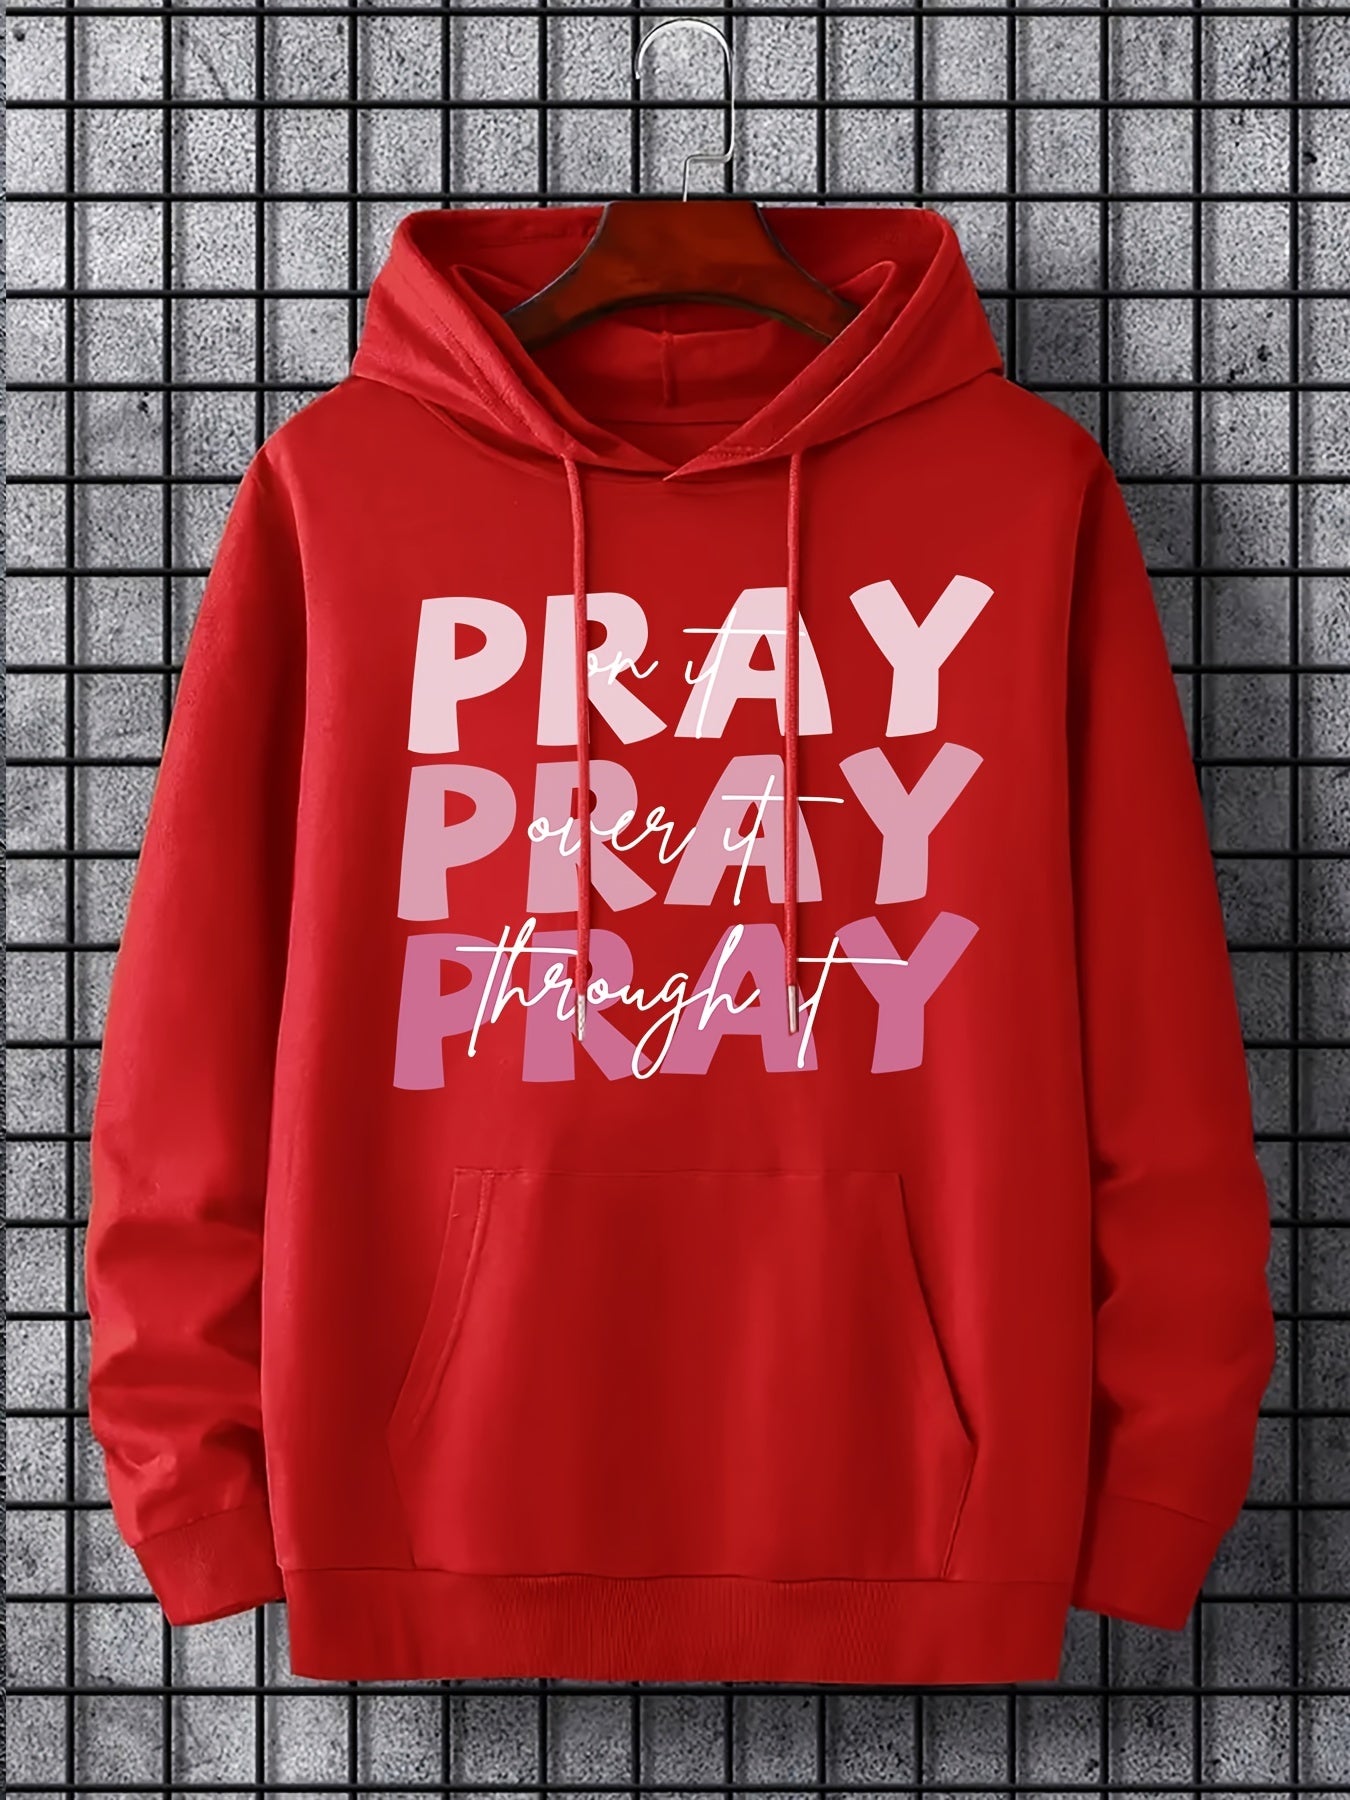 Pray On It Pray Over It Pray Through It Women's Christian Pullover Hooded Sweatshirt claimedbygoddesigns